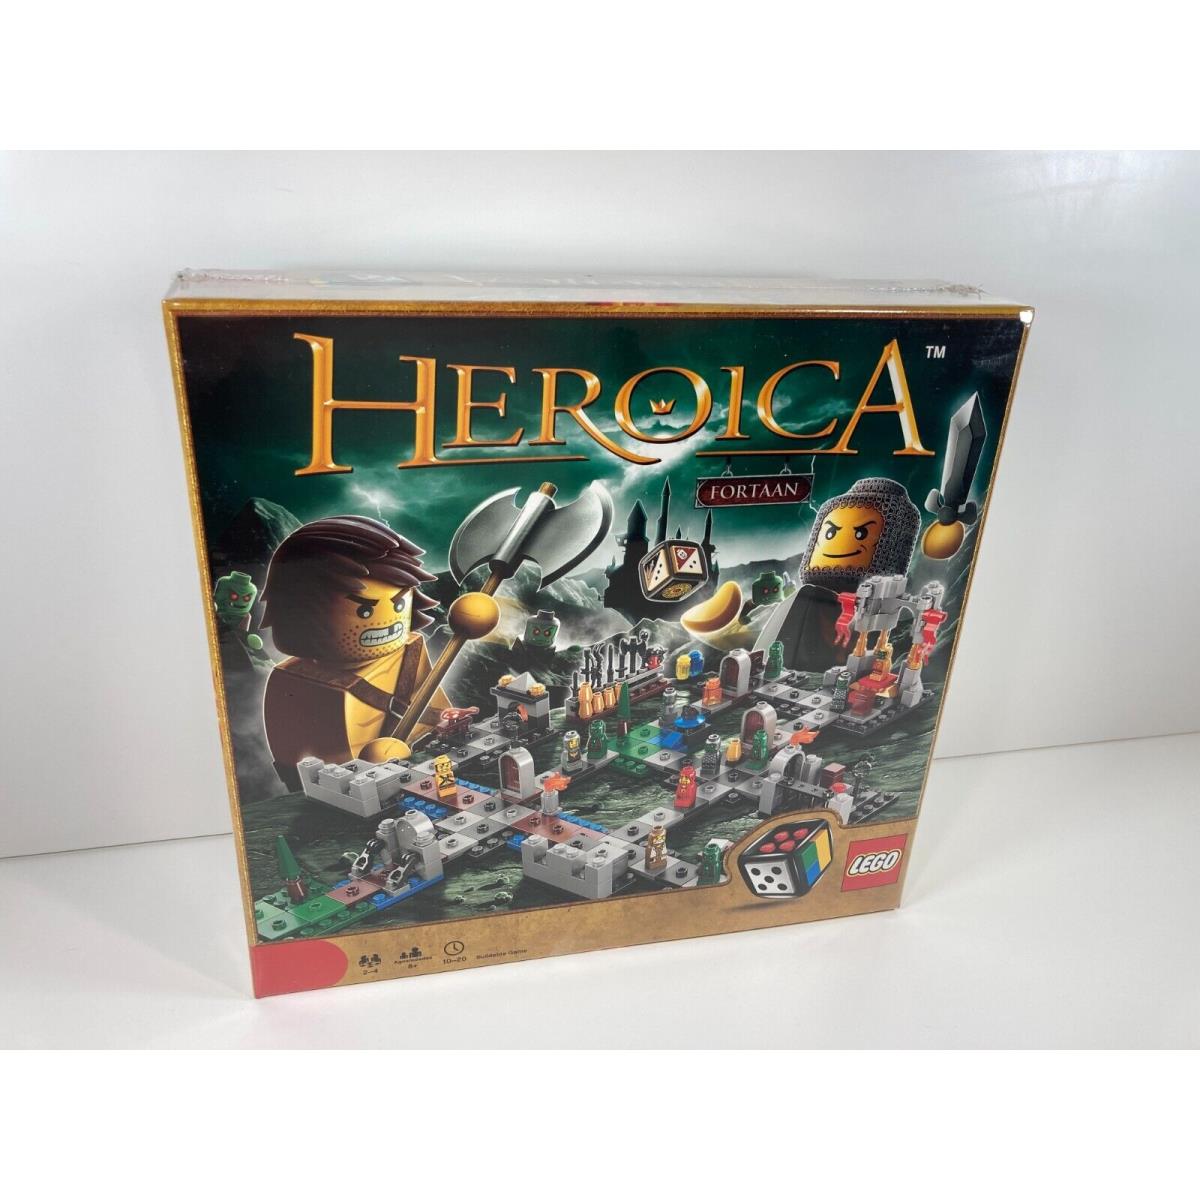 Lego 3860 Heroica Fortaan Game 4611741